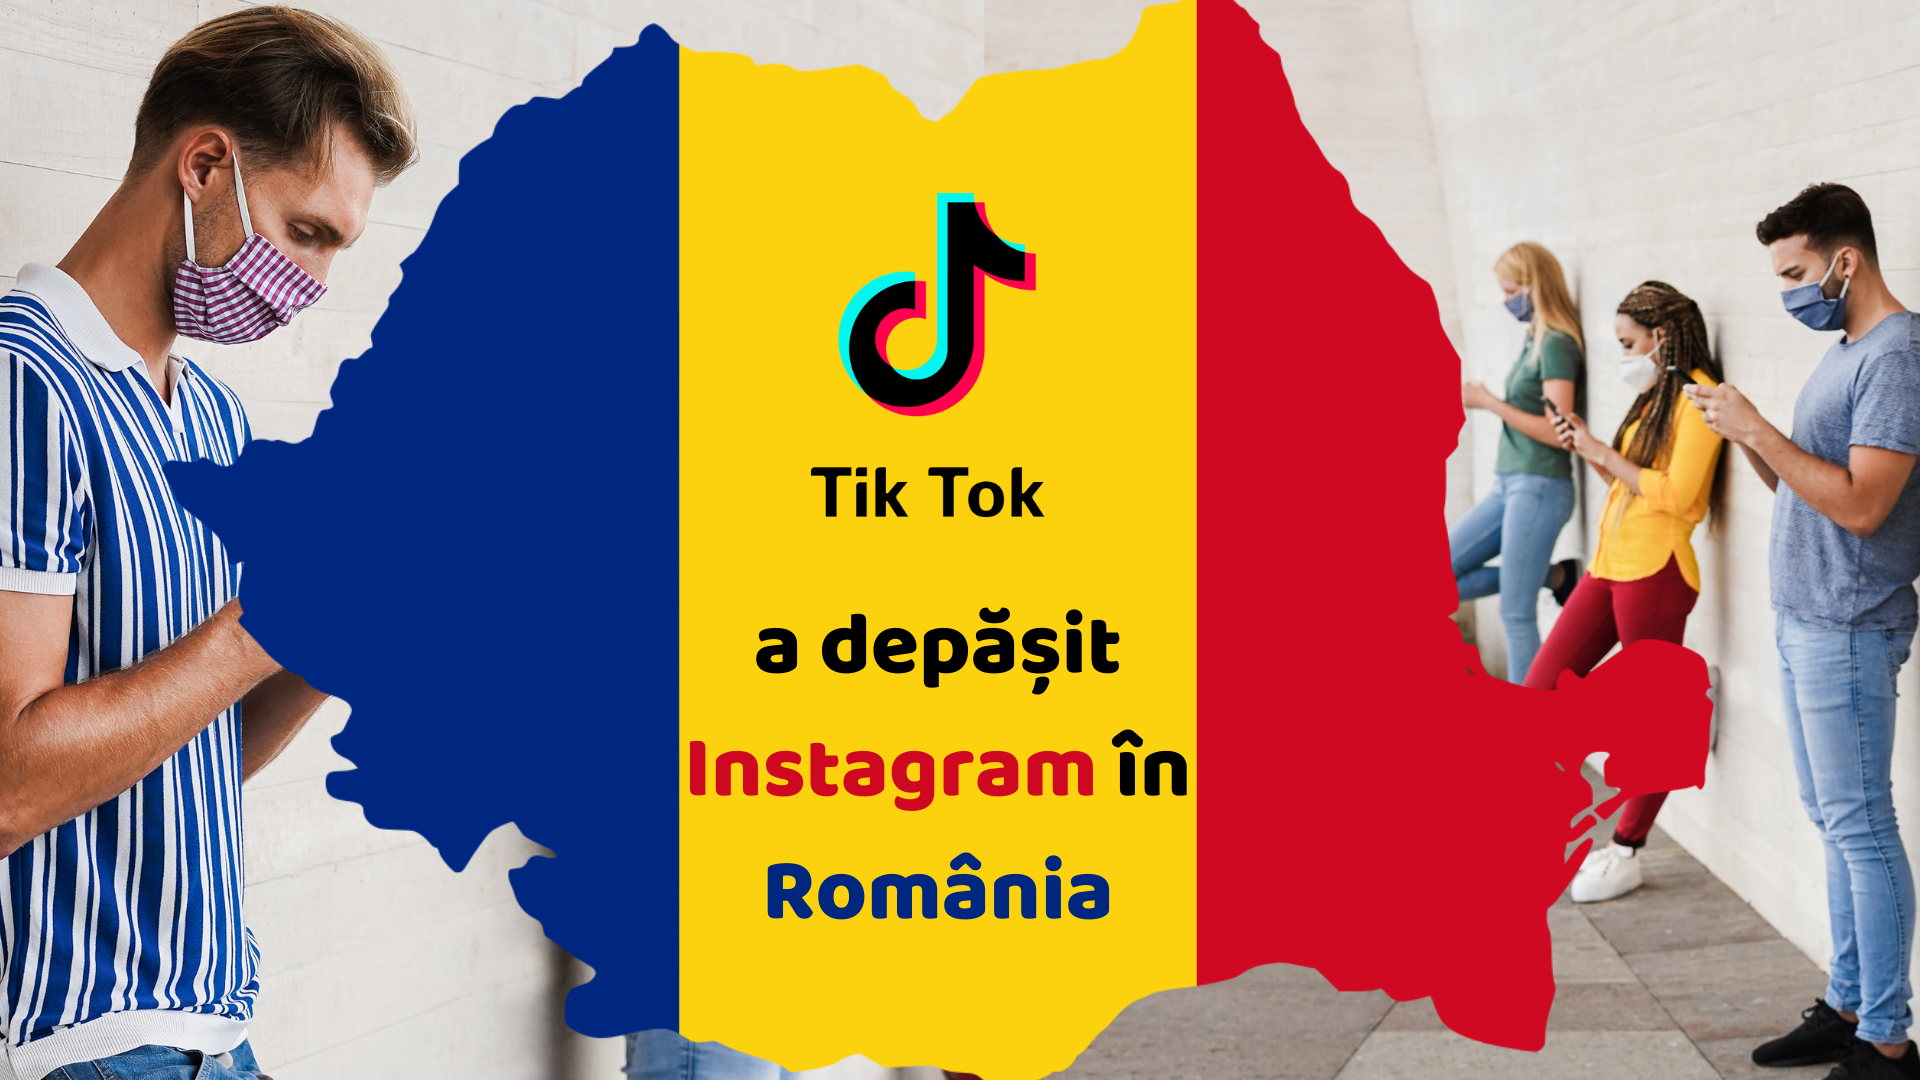 TikTok a depășit Instagram în România